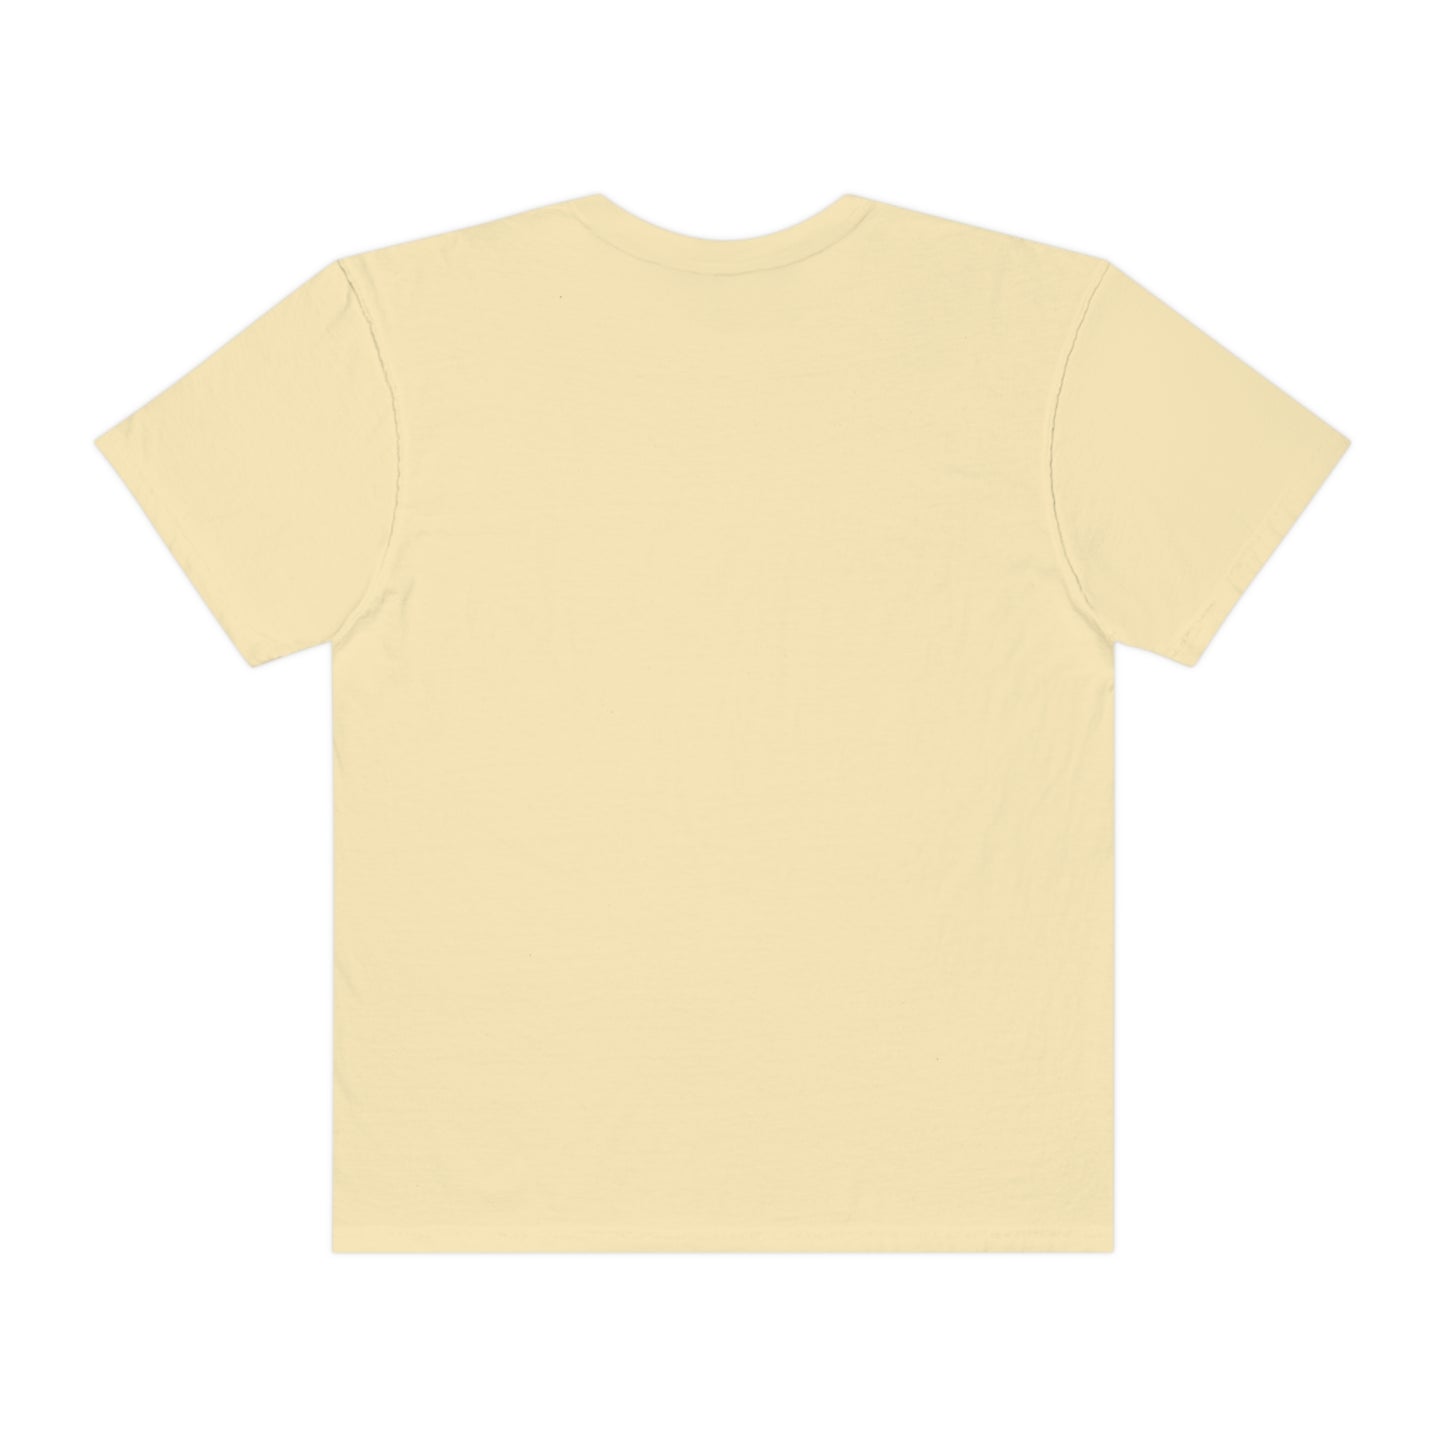 Plantz Garment-Dyed T-shirt